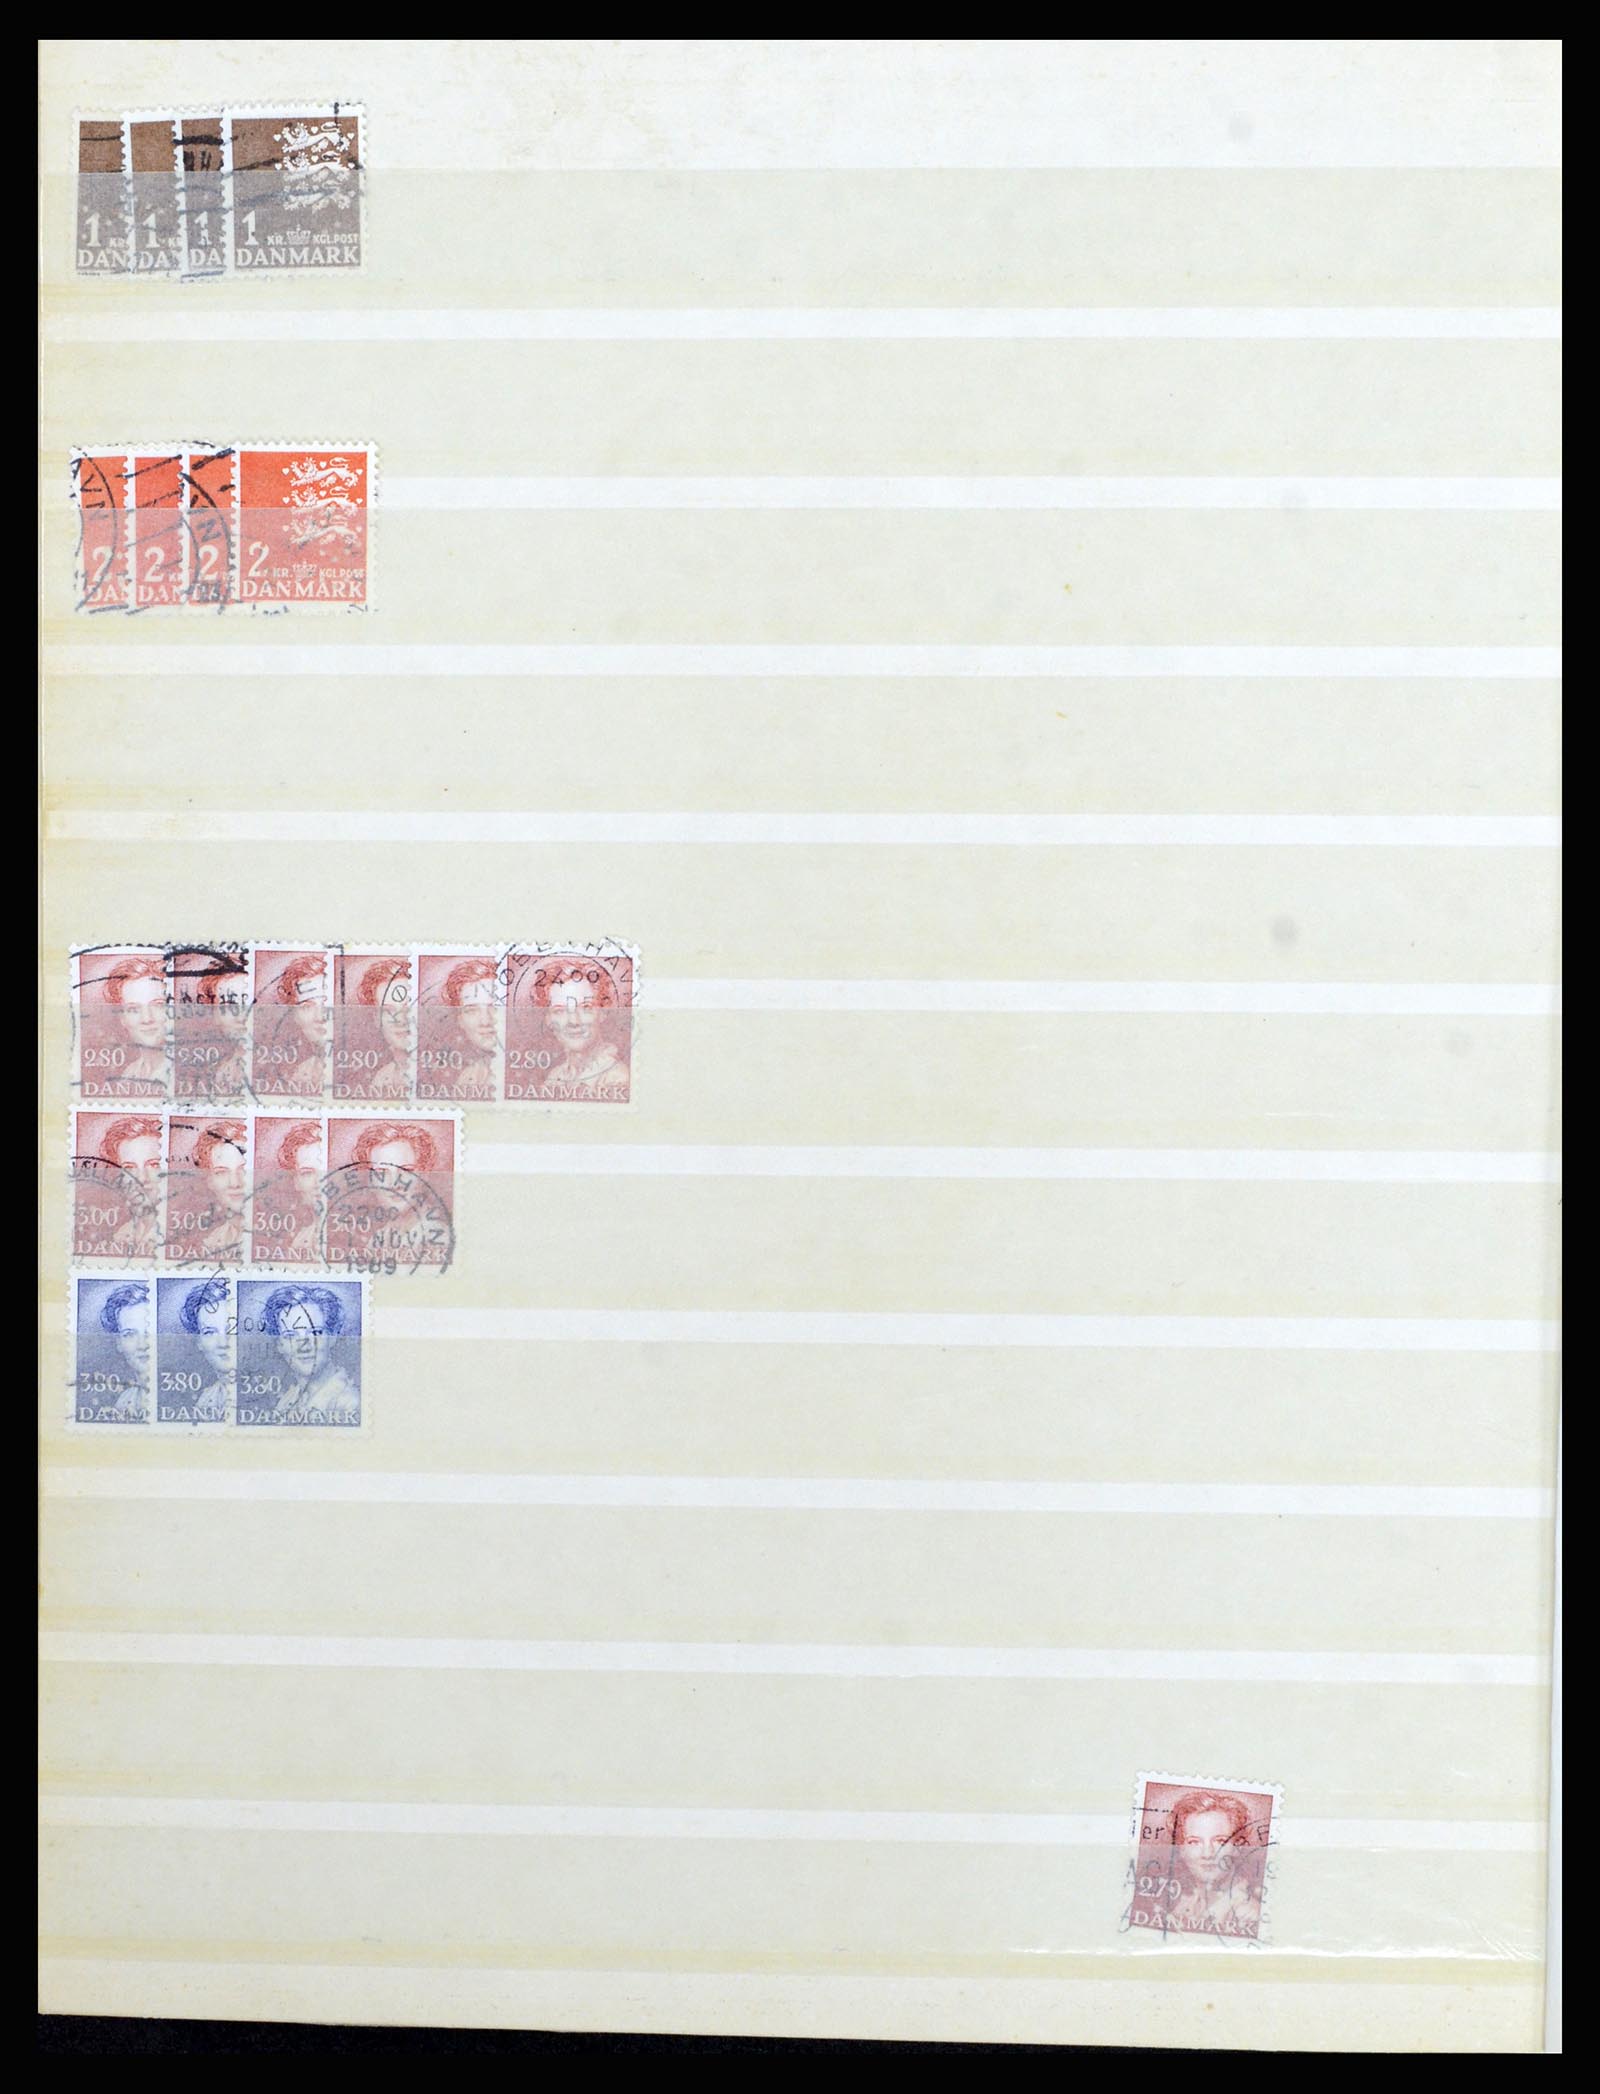 37056 096 - Stamp collection 37056 Denmark perfins.